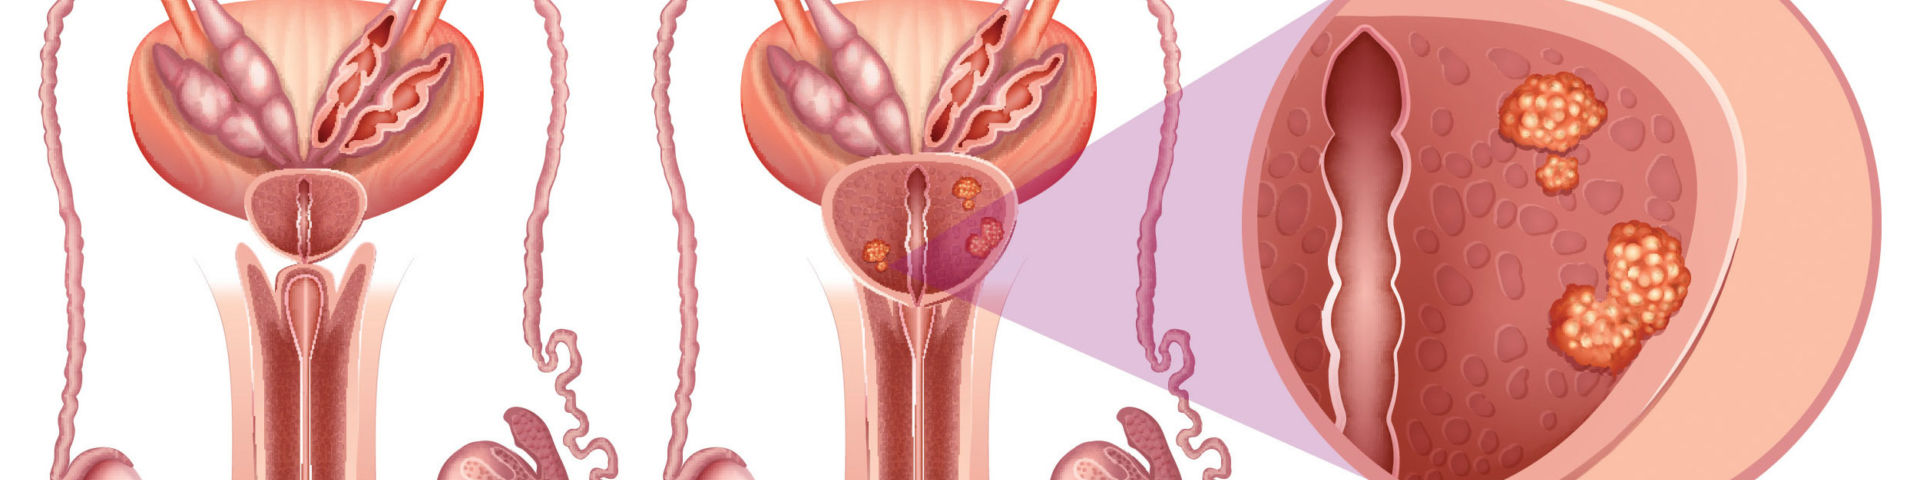 Prostate diagram banner